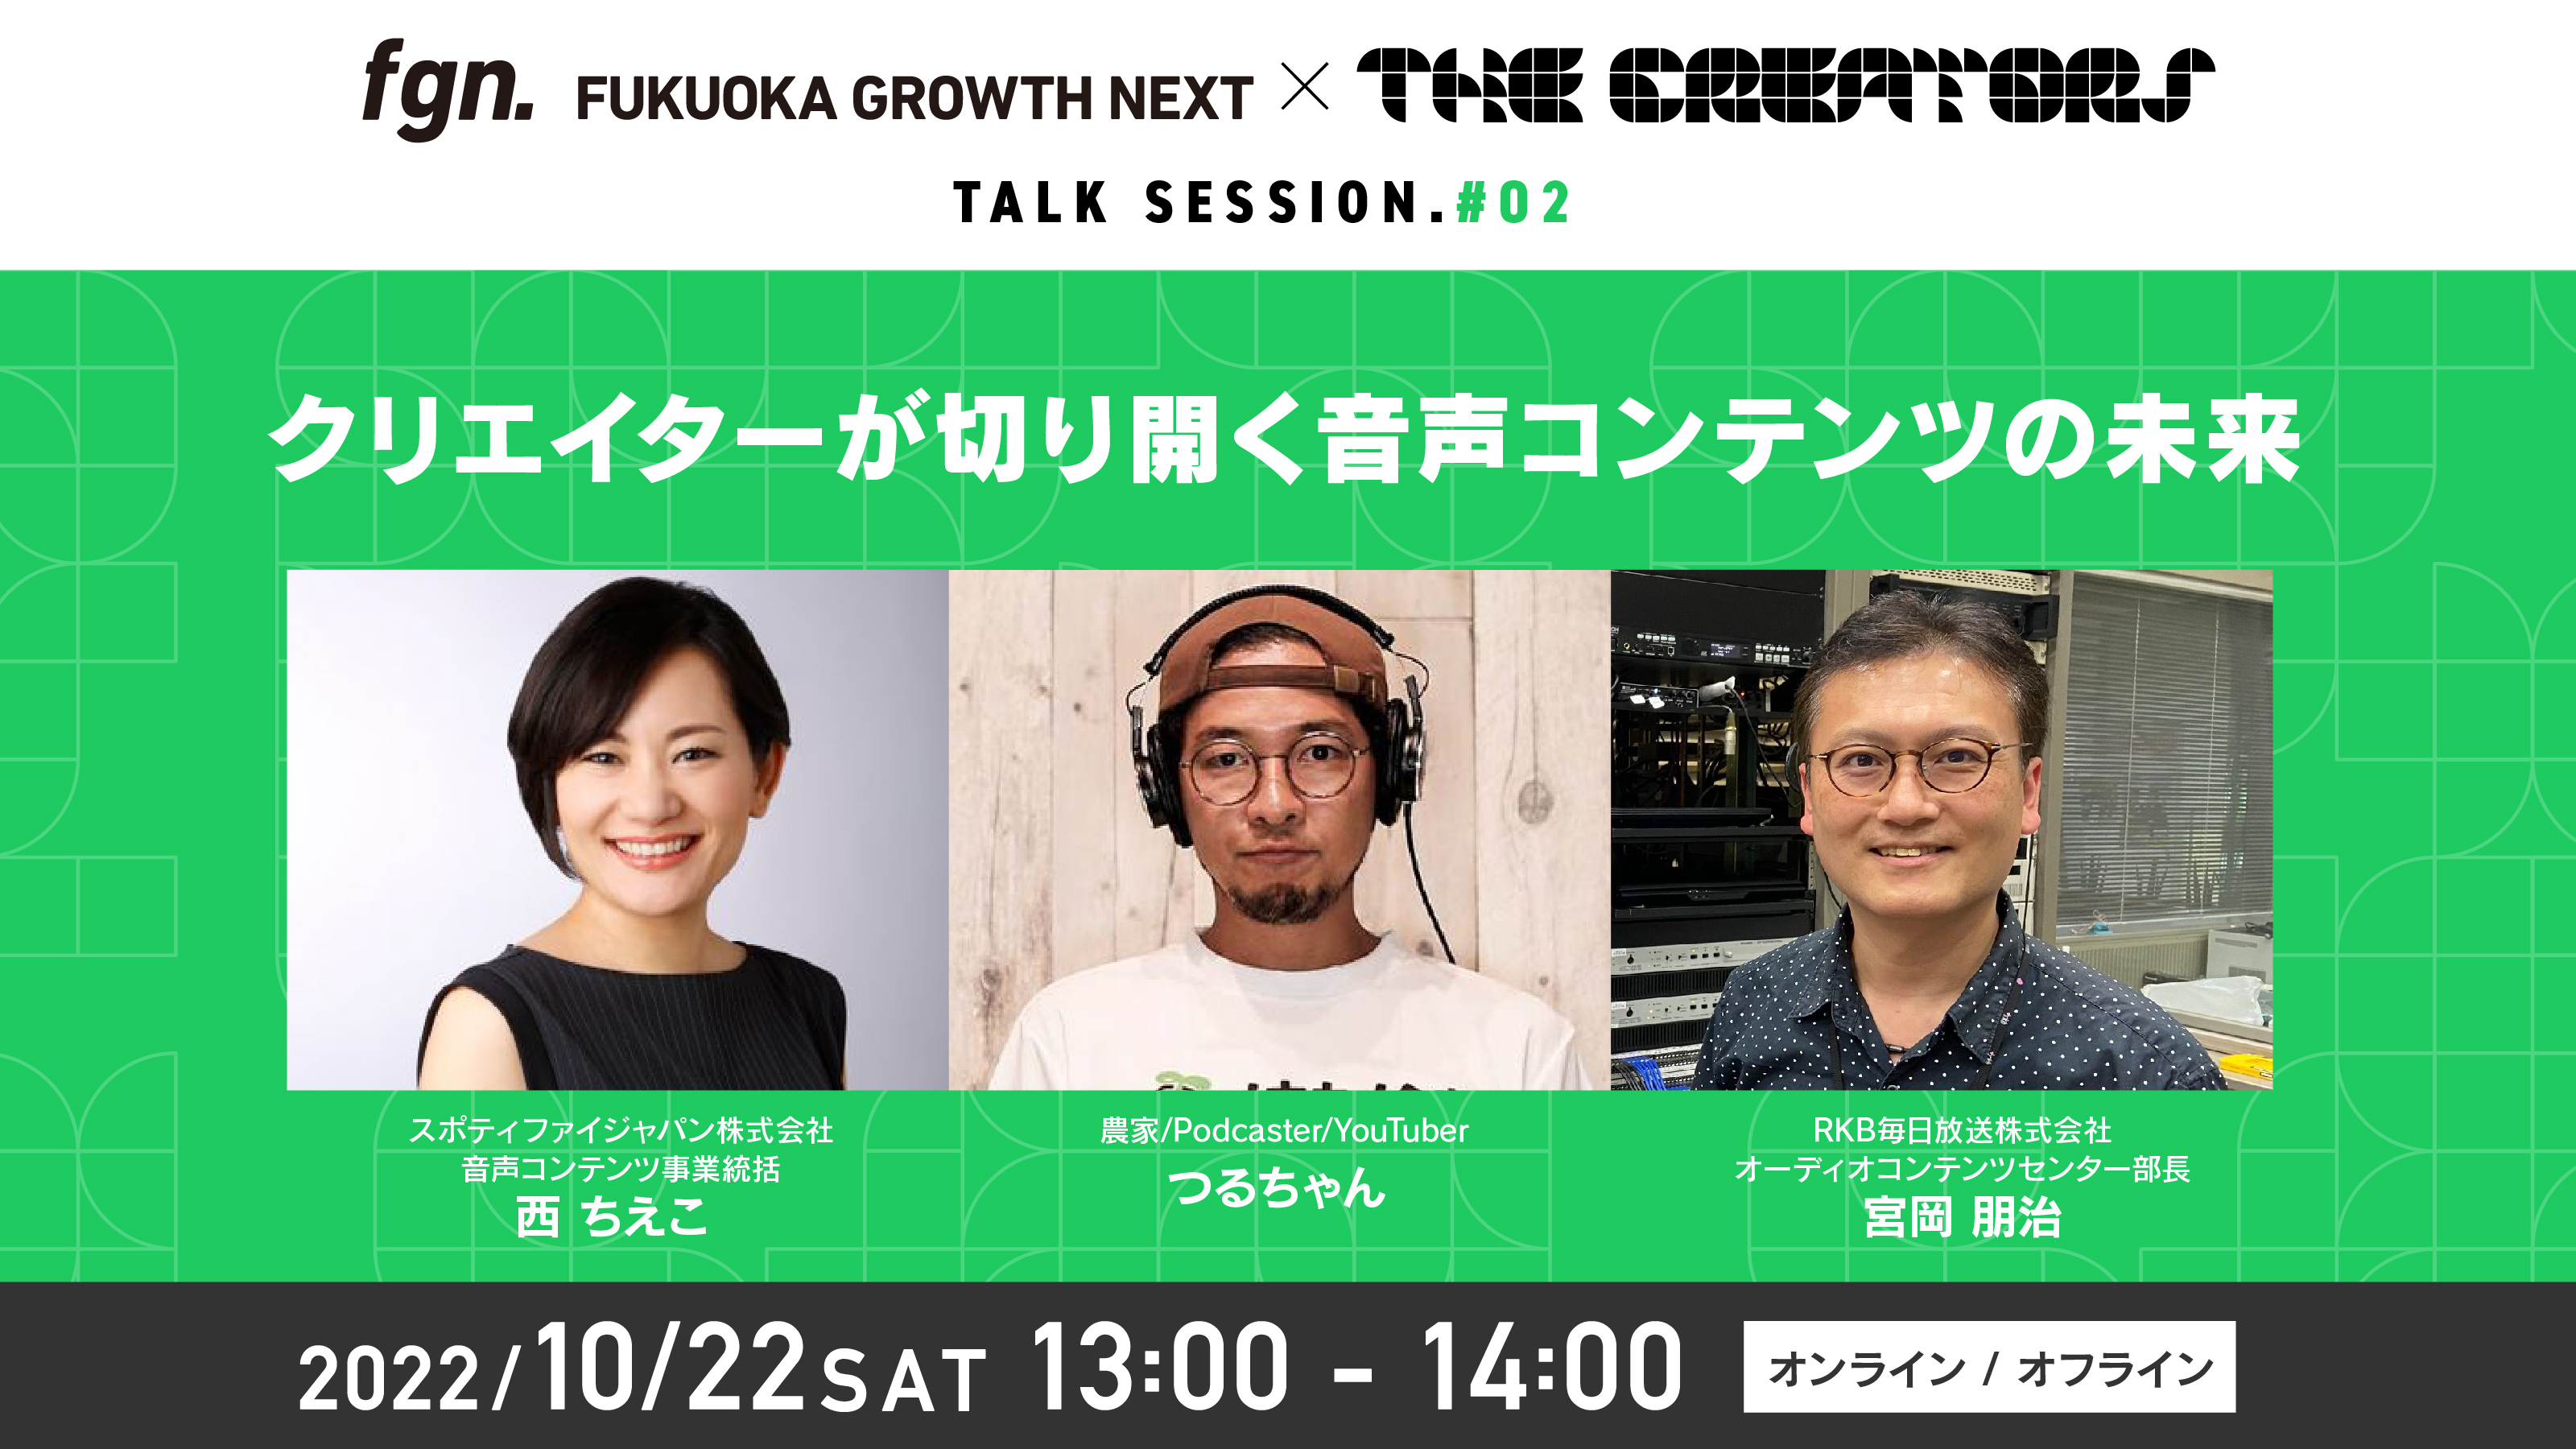 Fukuoka Growth Next × The Creators TALK SESSION #02